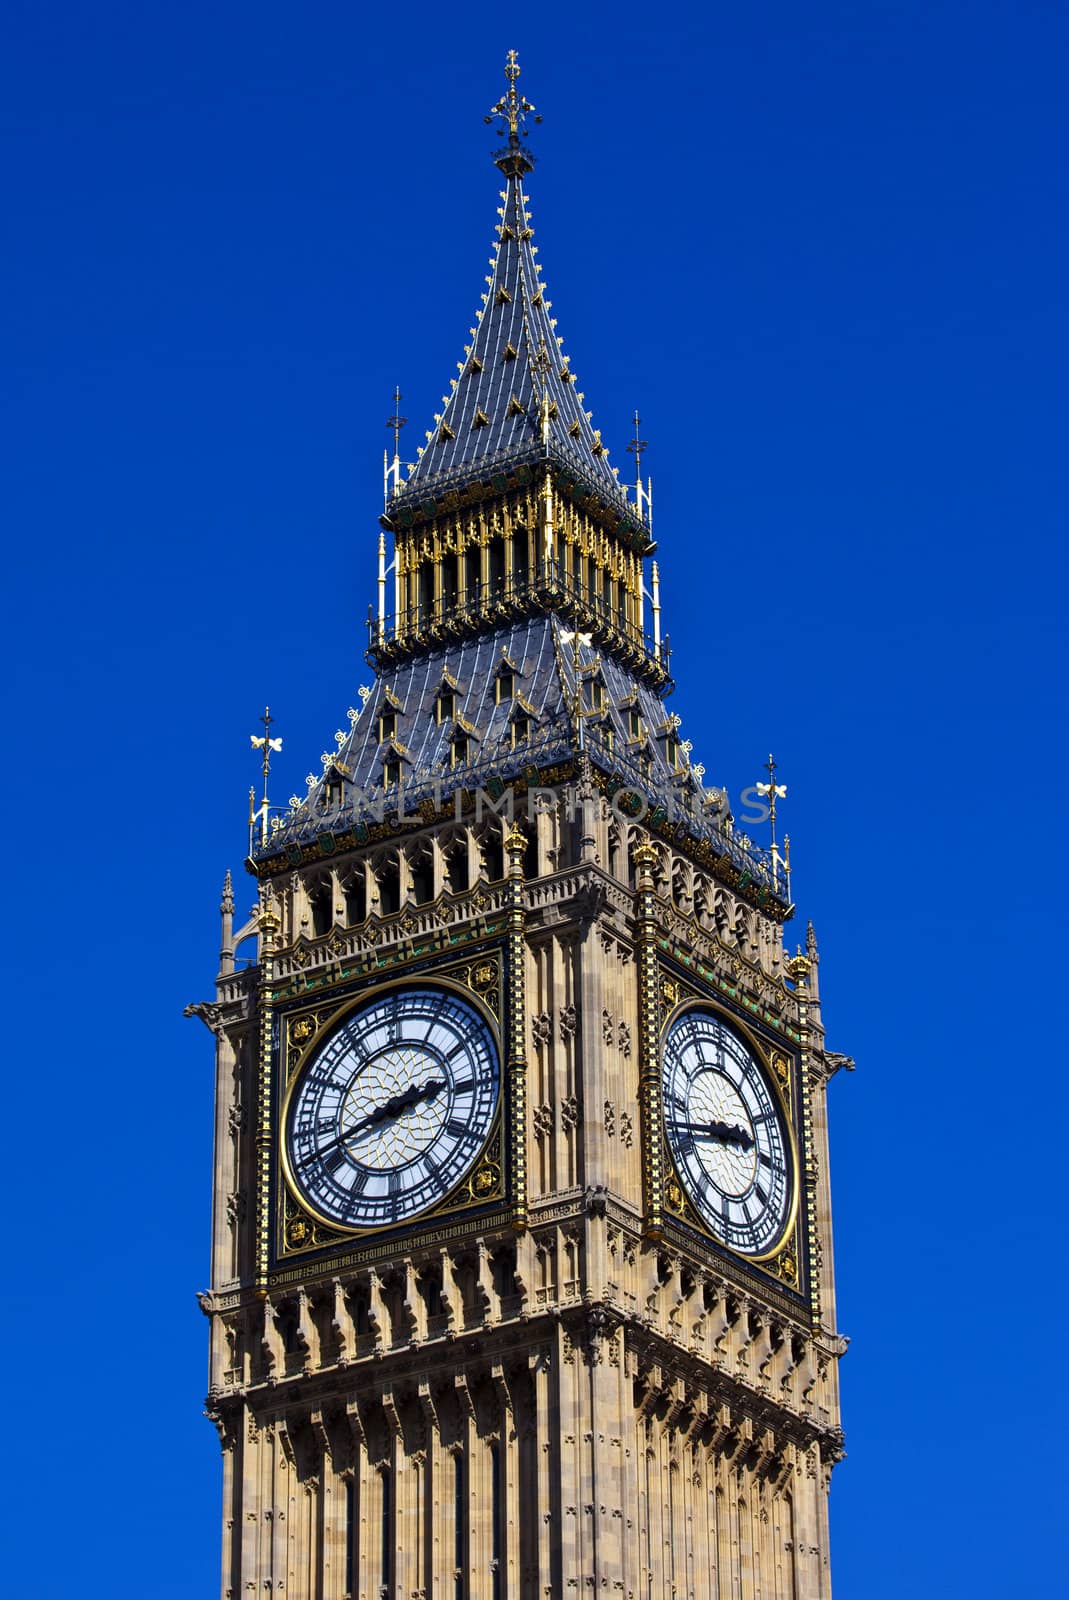 The magnificent Big Ben (Elizabeth Tower) in London.